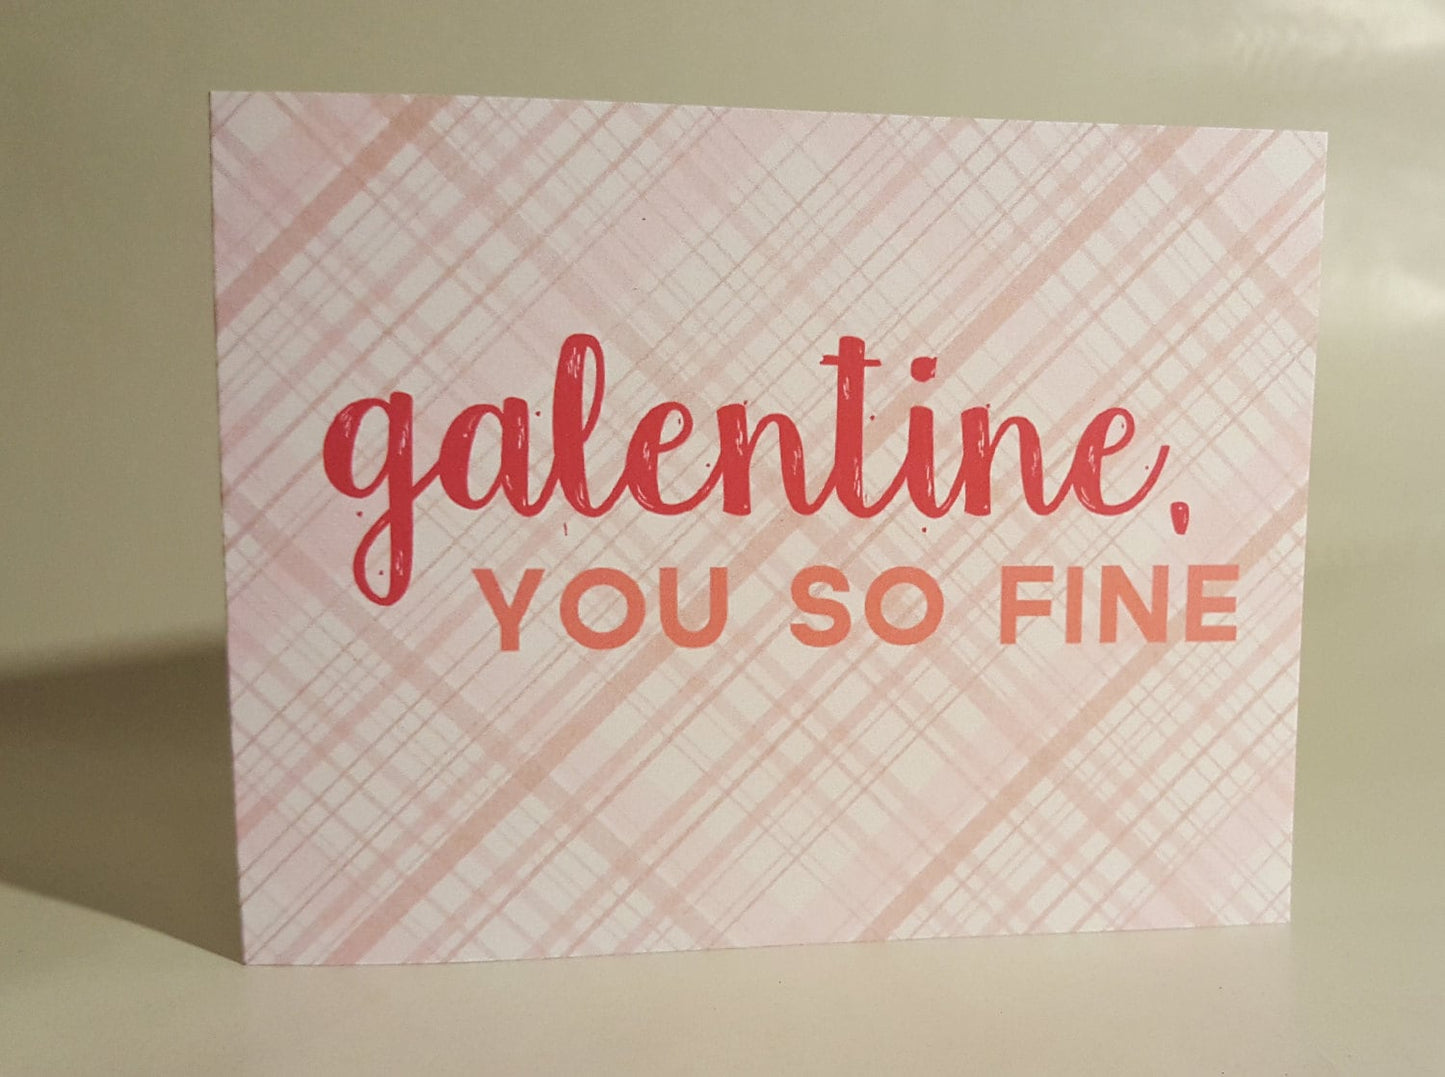 Galentine's Day Card - Galentine, You So Fine